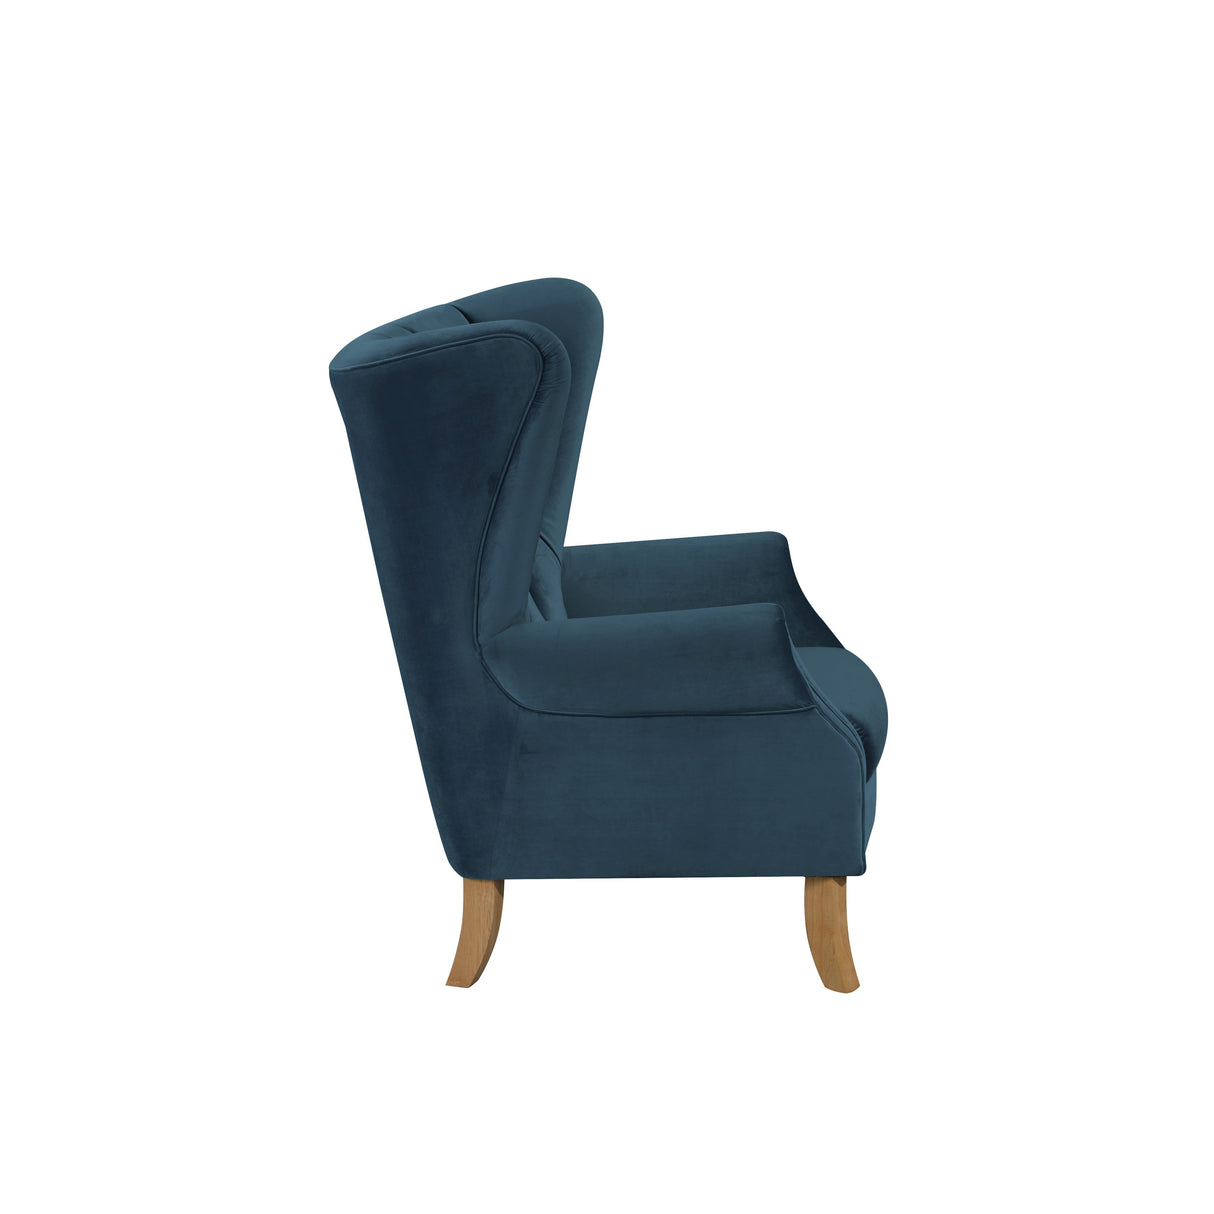 Acme - Adonis Accent Chair 59518 Azure Blue Velvet